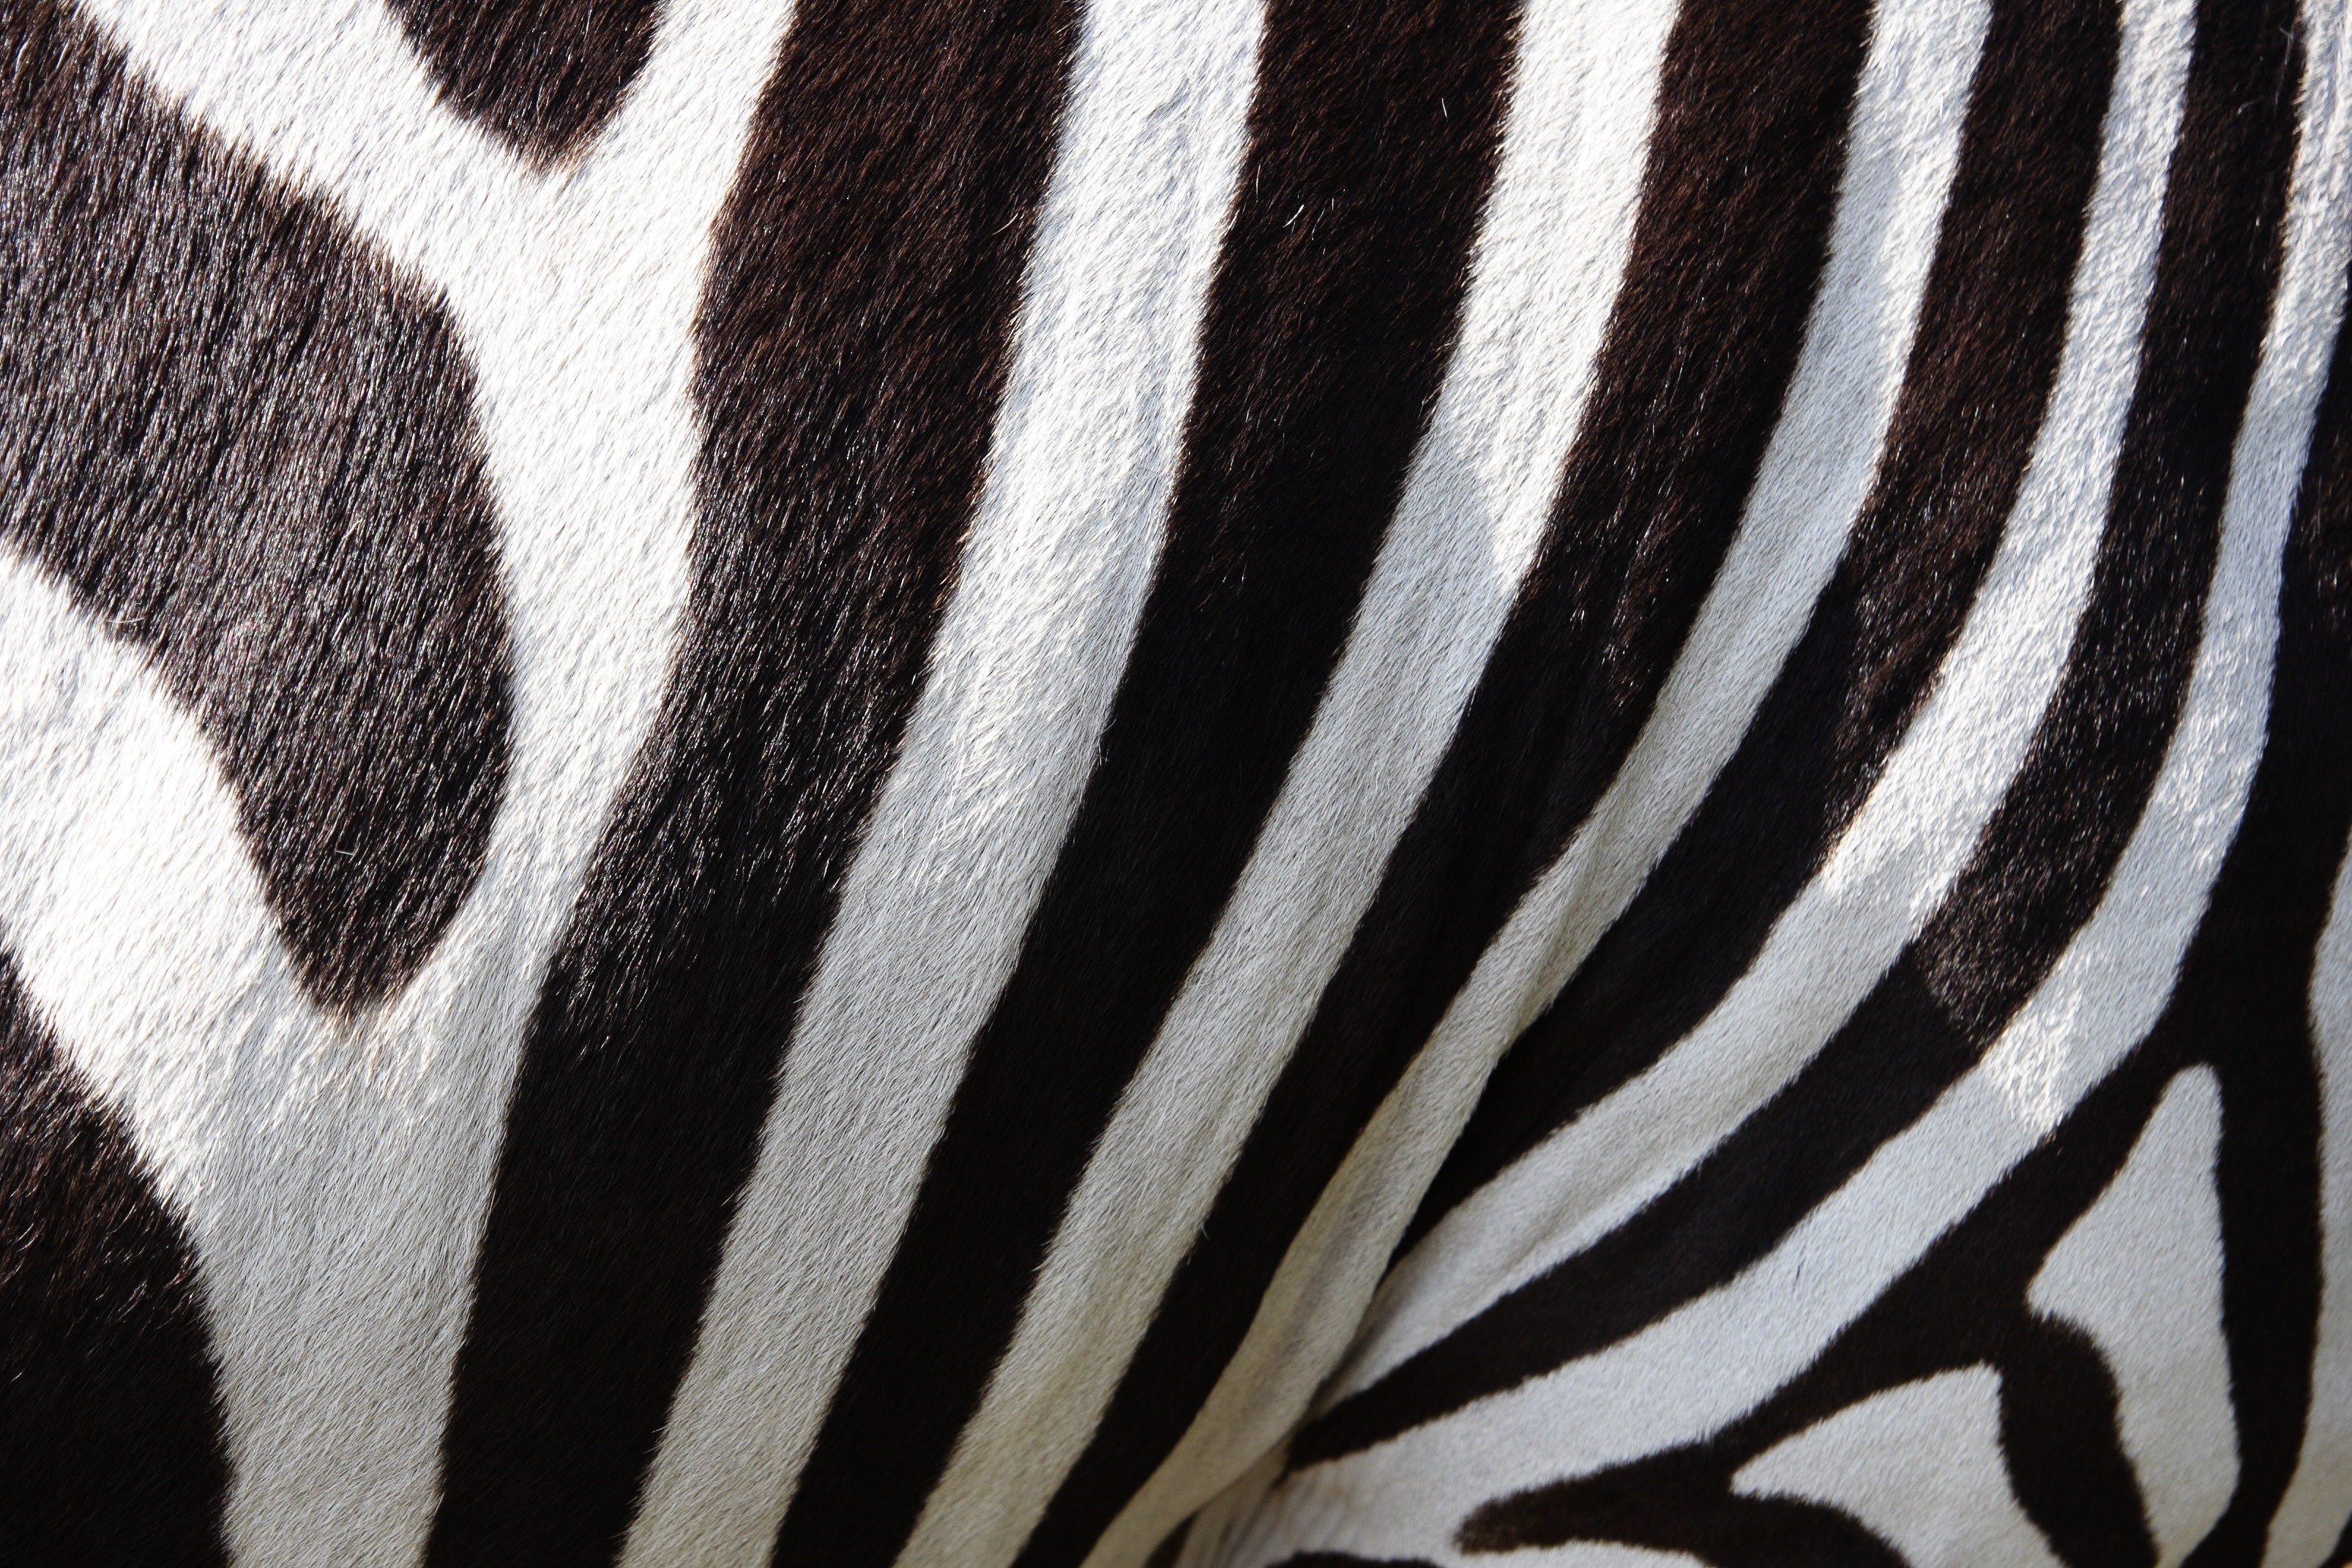 Free stock photo of zebra fur, Close-up zebra details, Textured zebra visuals, High-quality animal imagery, 3220x2150 HD Desktop